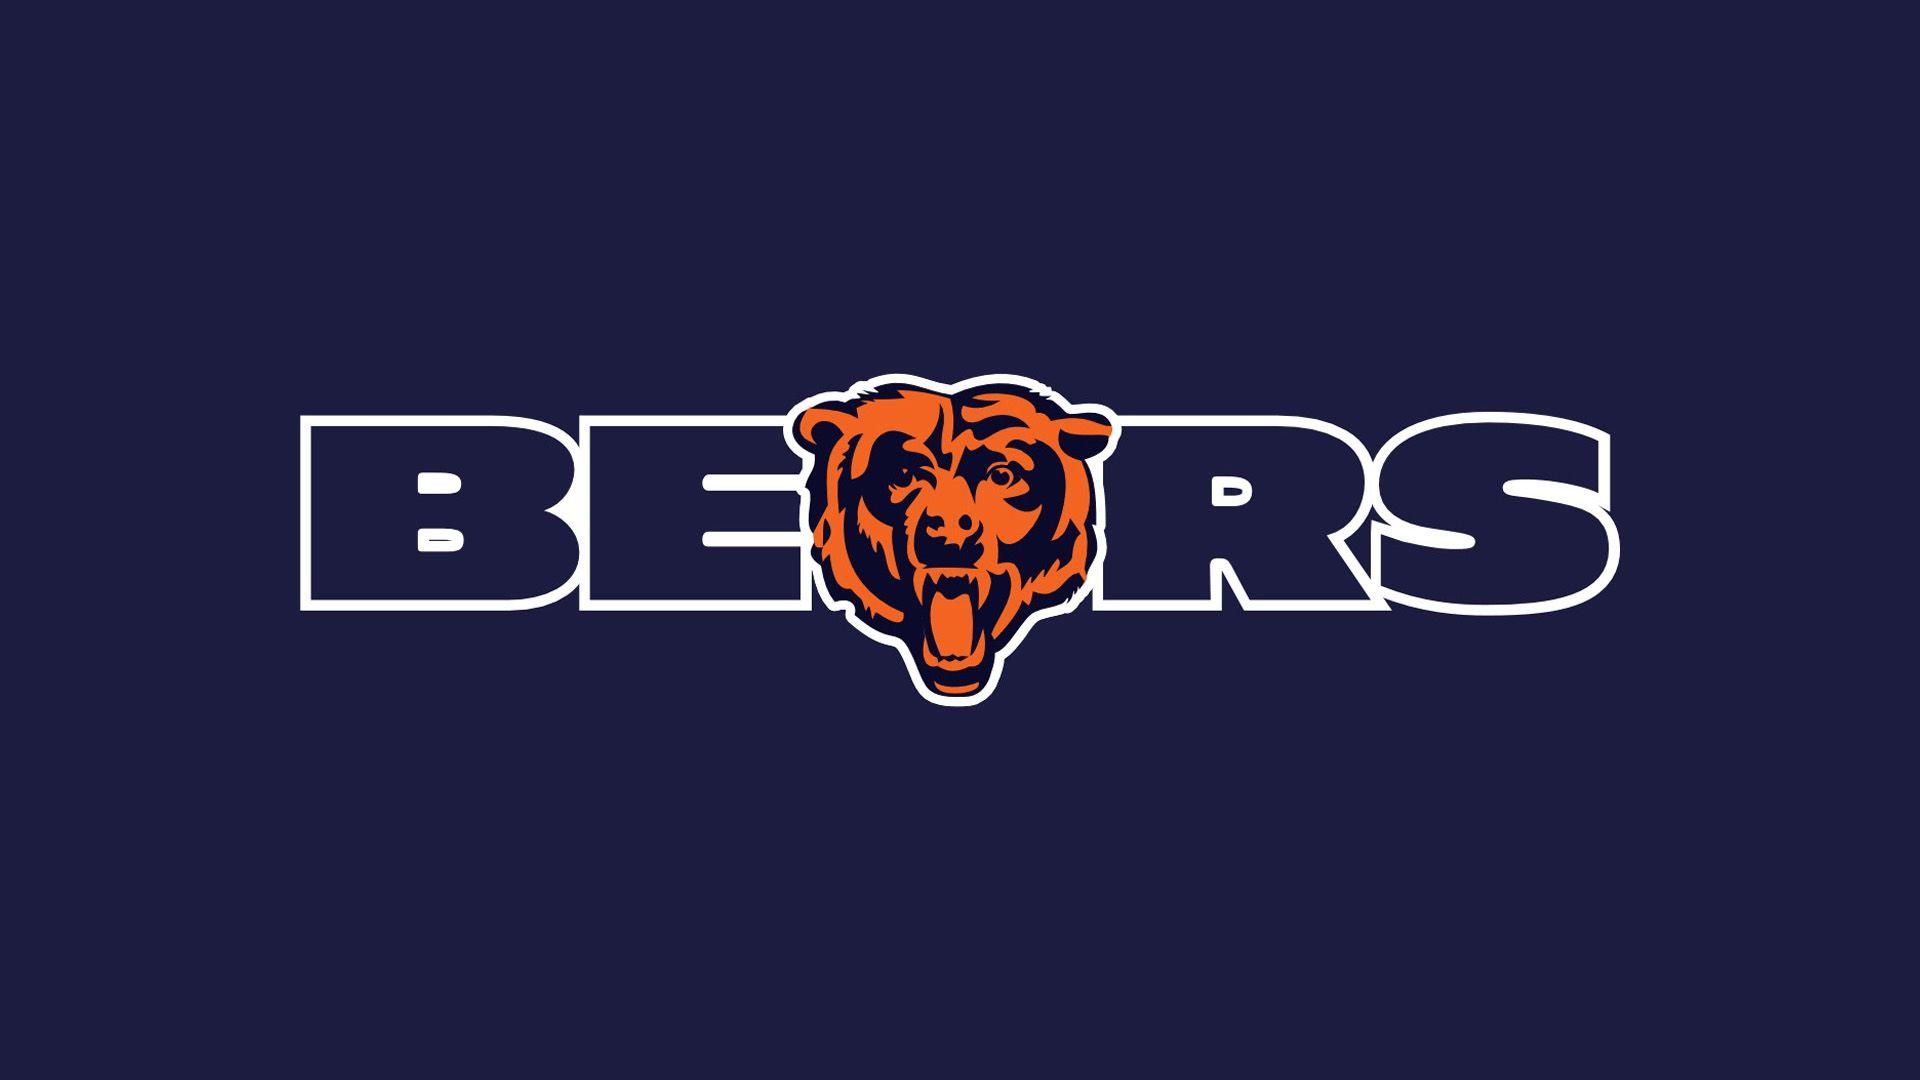 Chicago Bears Logo Wallpaper 44442 1920x1080 px